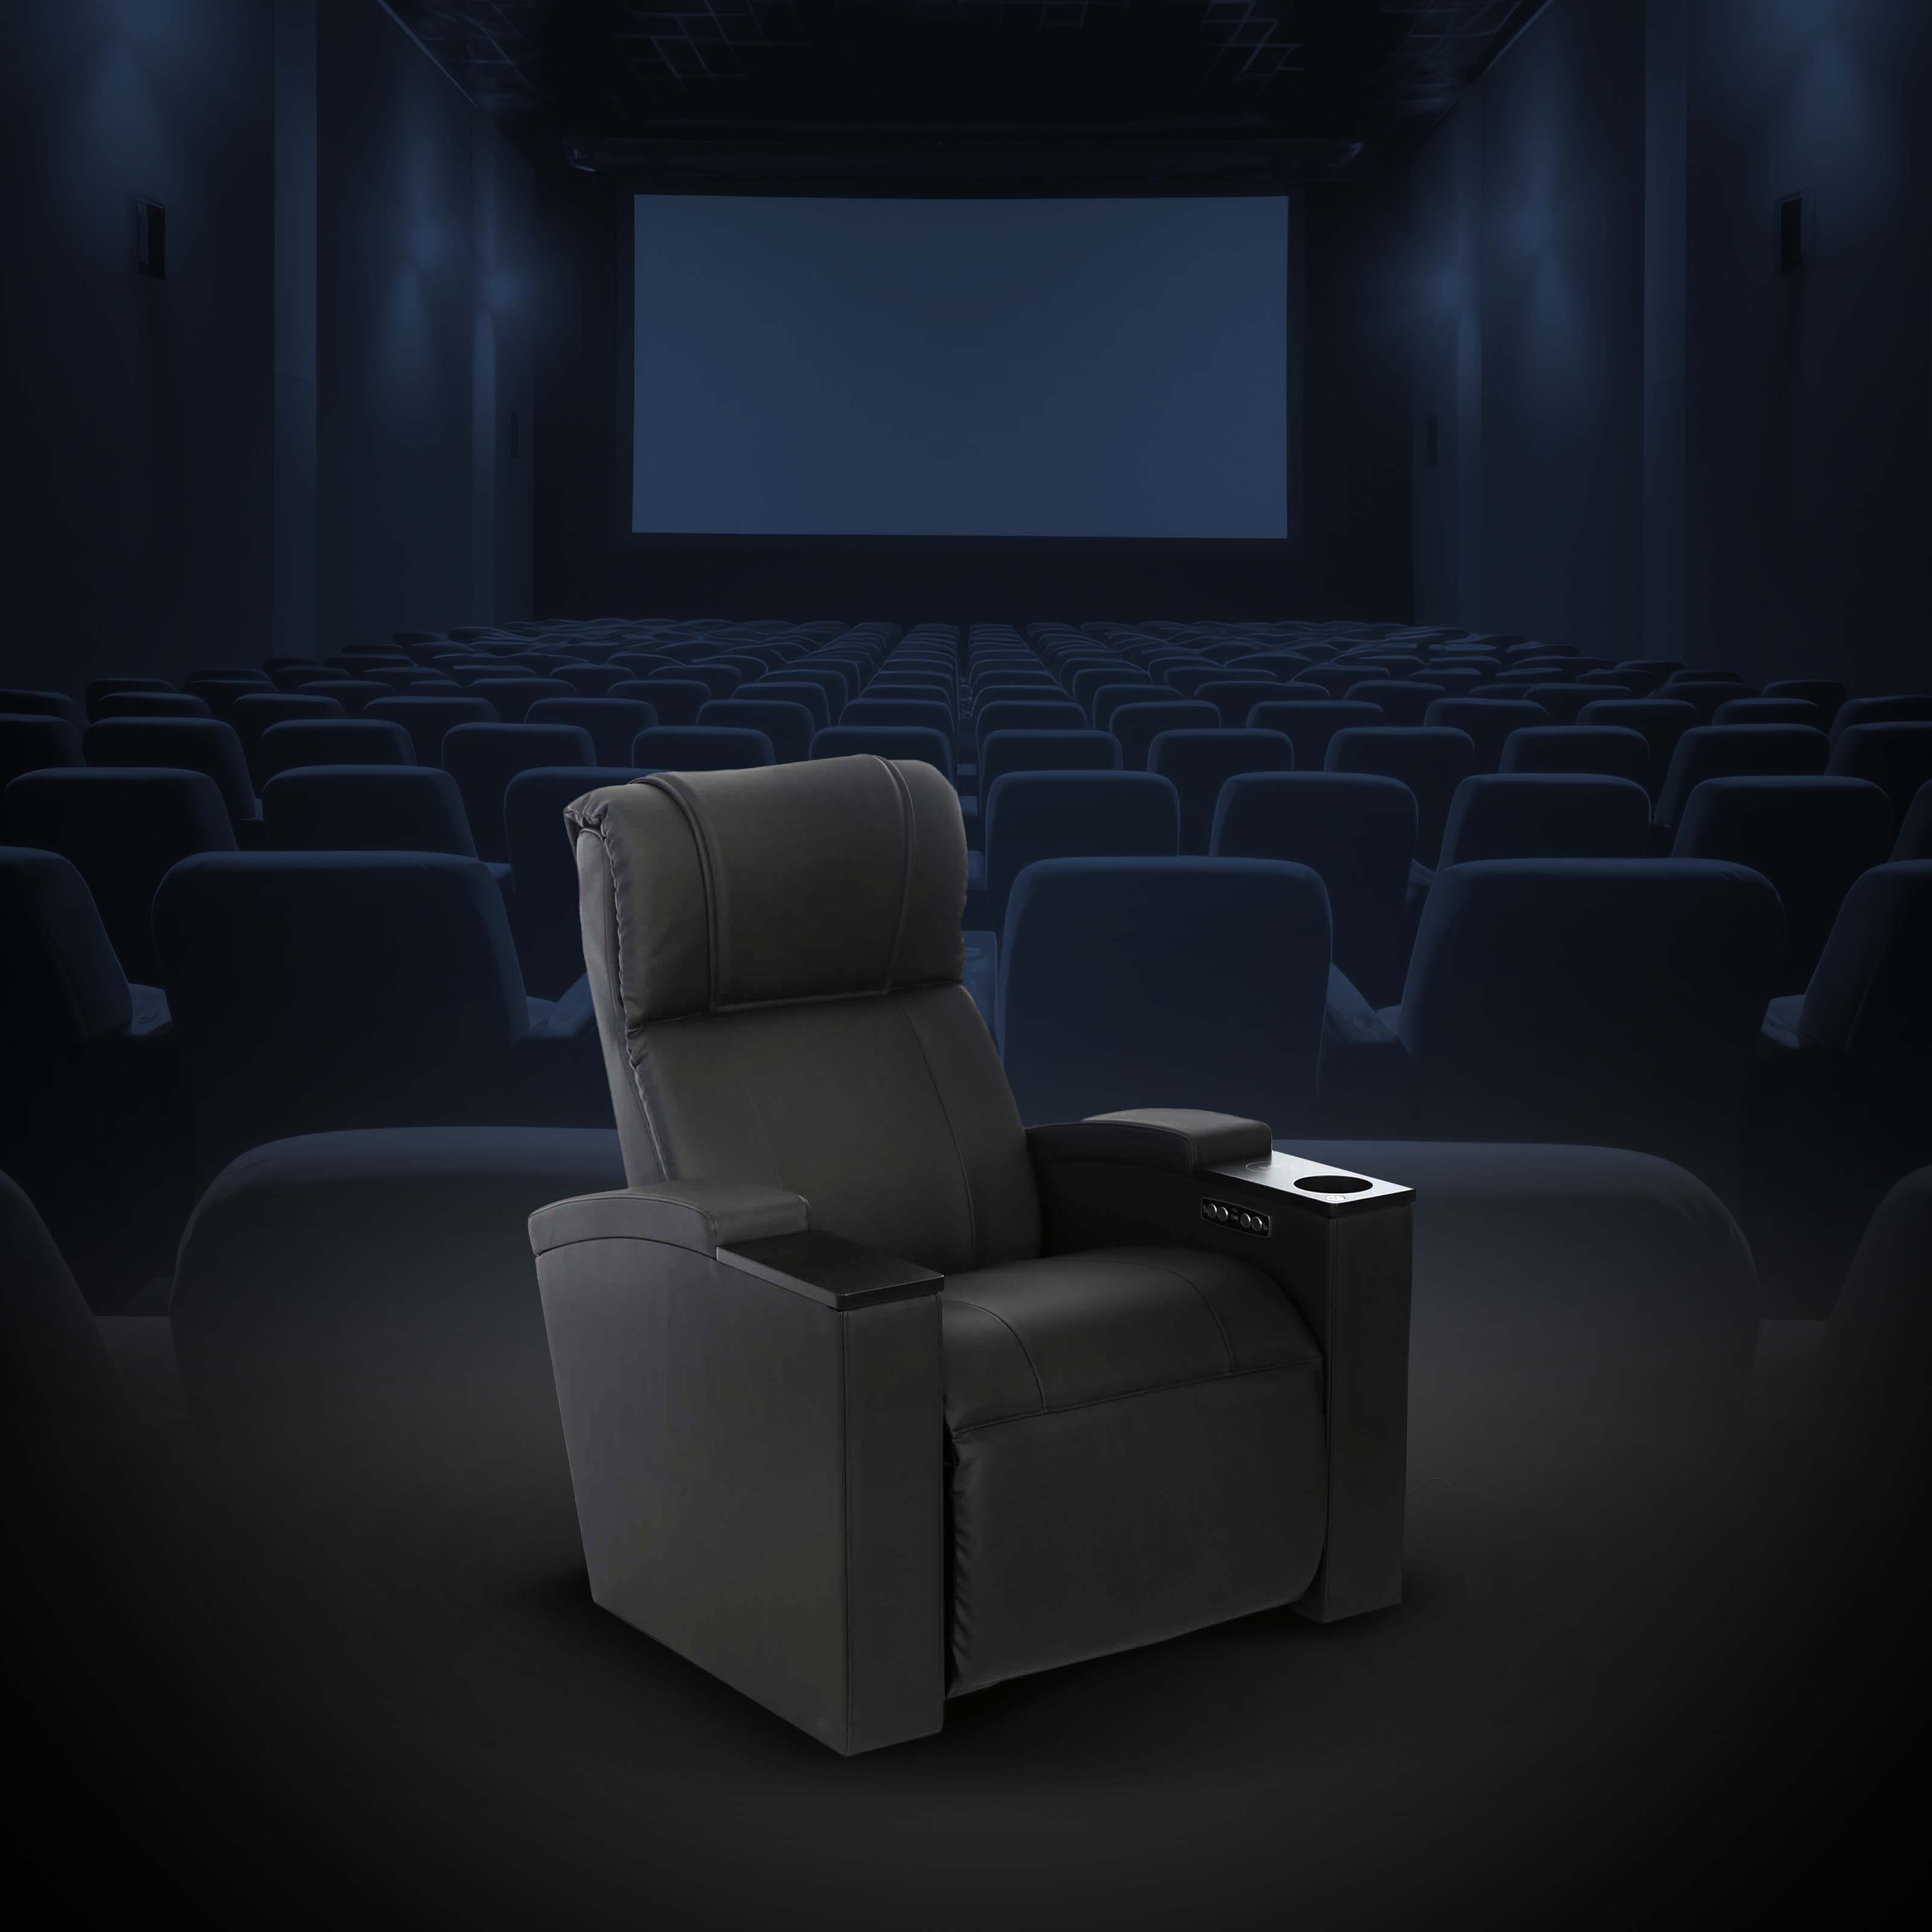 Simko Seating - Cinema Seats